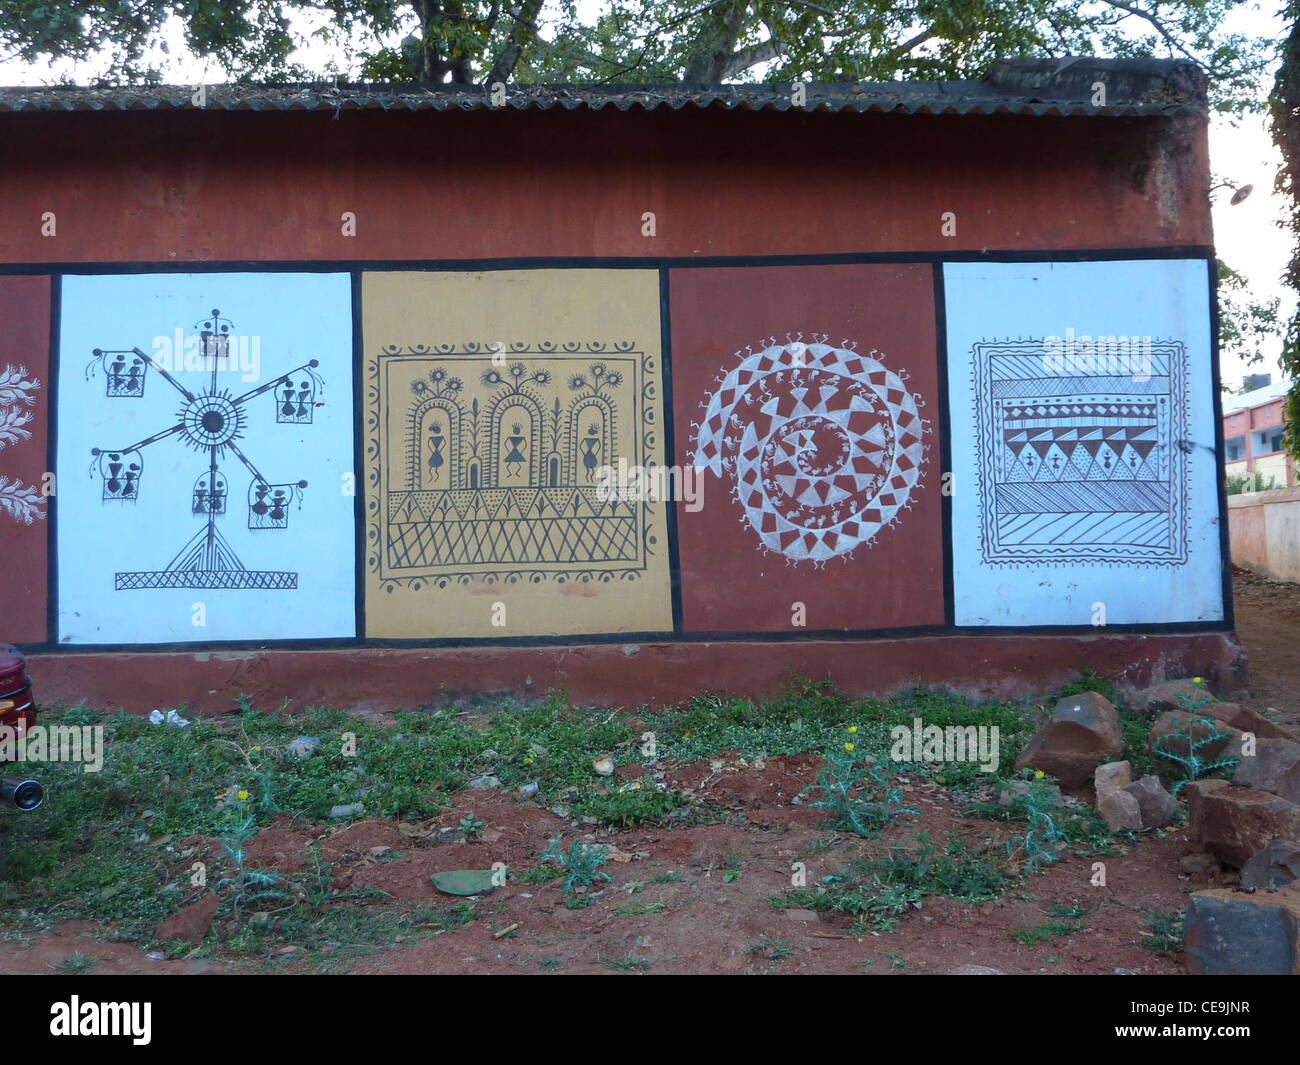 Tribal patterns decorate the walls in Koraput, Orissa, India Stock Photo